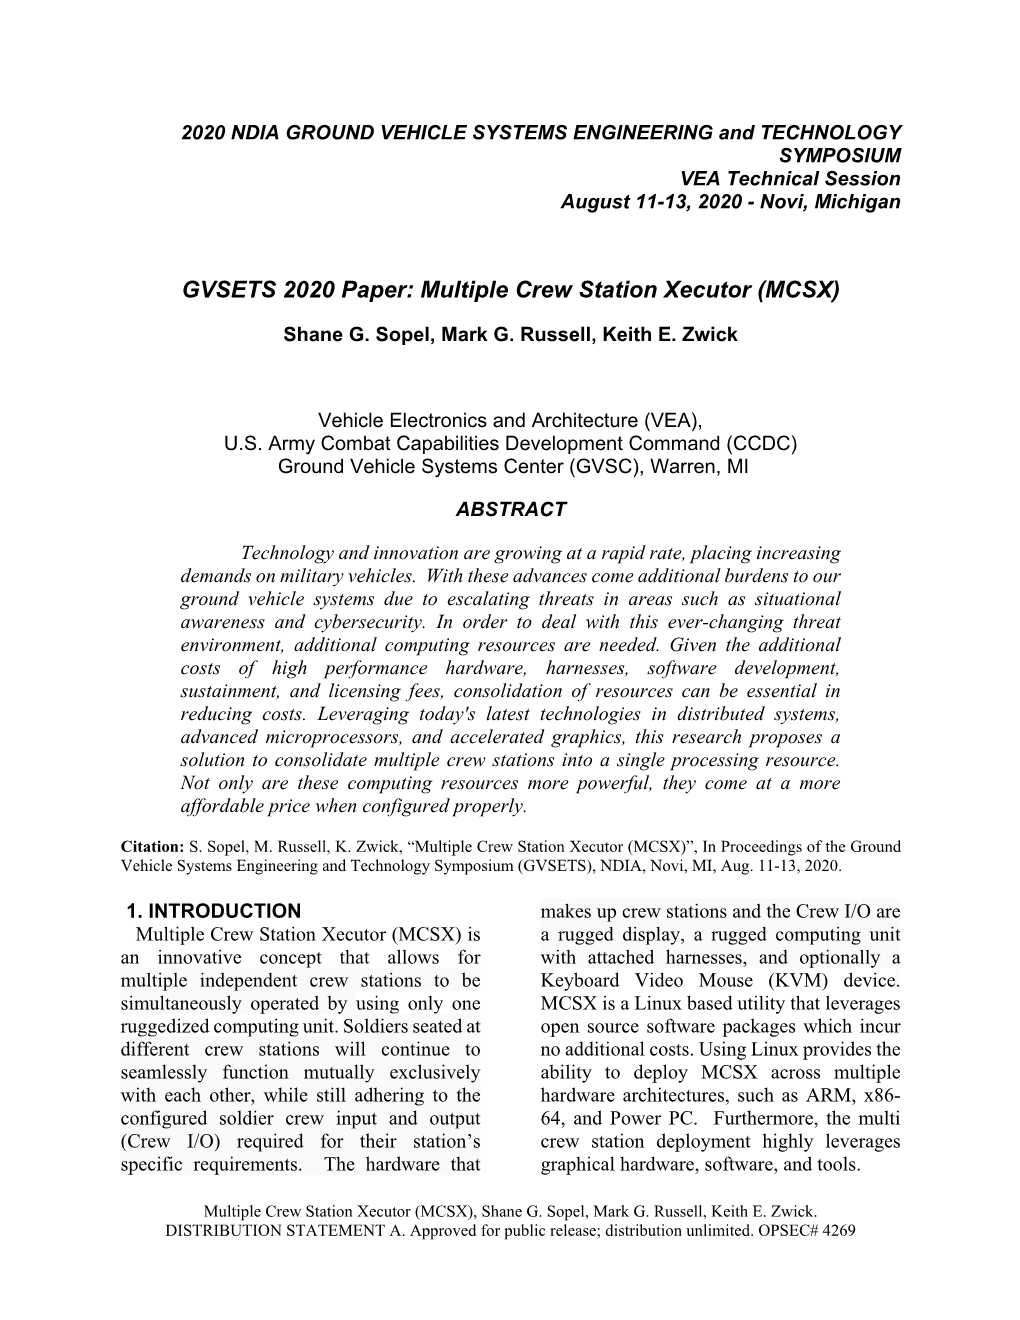 GVSETS 2020 Paper: Multiple Crew Station Xecutor (MCSX)